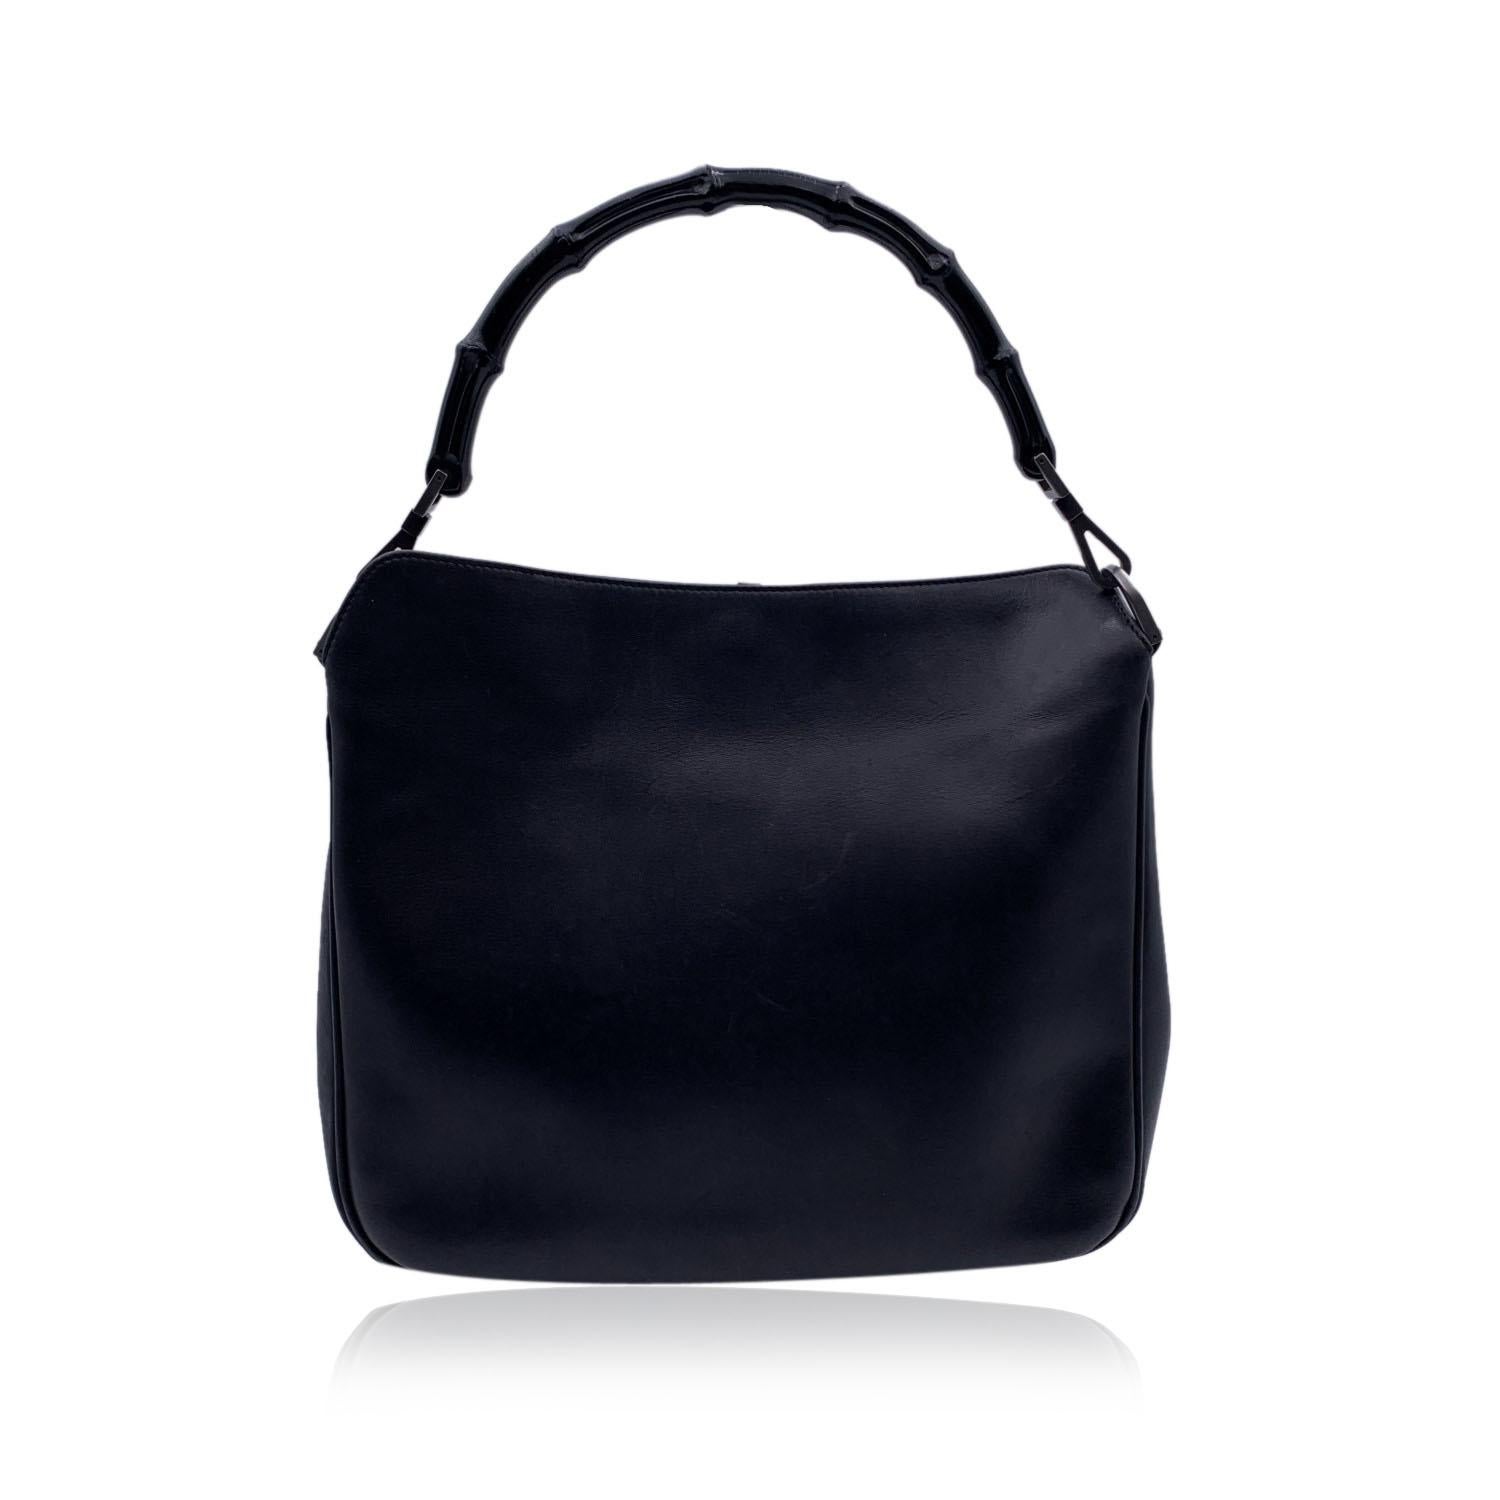 Gucci Black Leather Bamboo Handle Tote Handbag 1